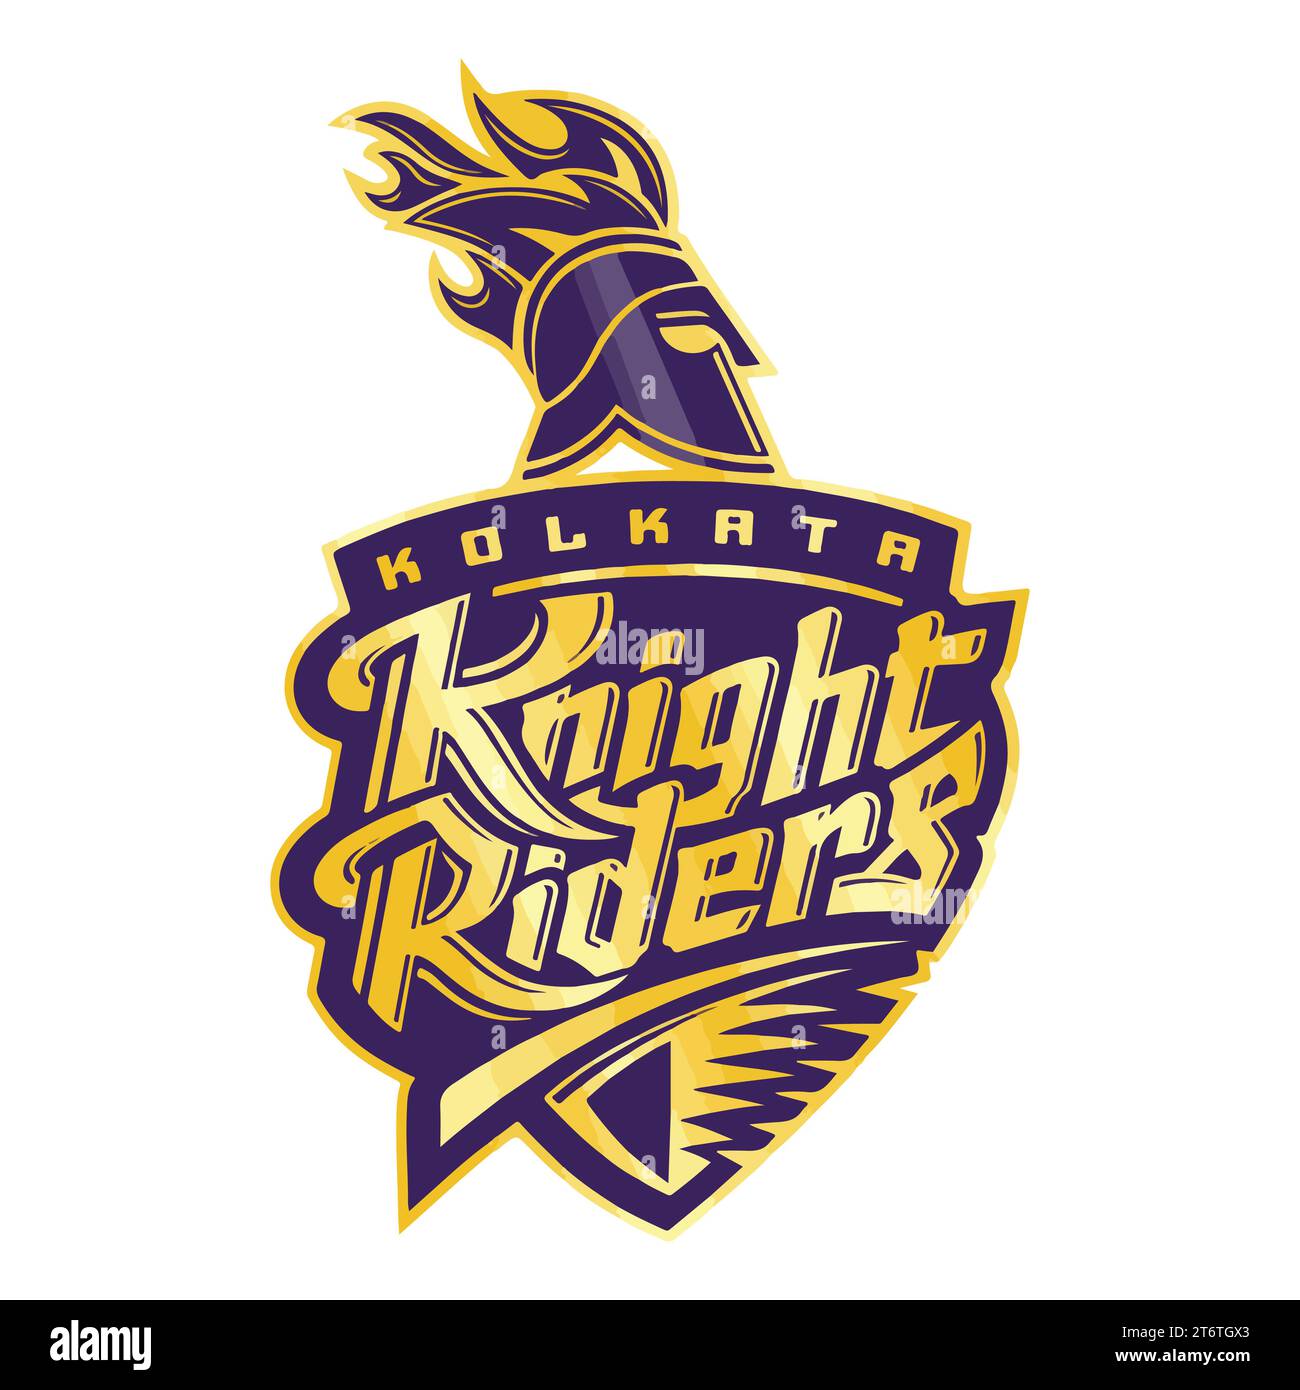 Kolkata Knight Riders logo Club de cricket professionnel indien, Illustration vectorielle image modifiable abstraite Illustration de Vecteur